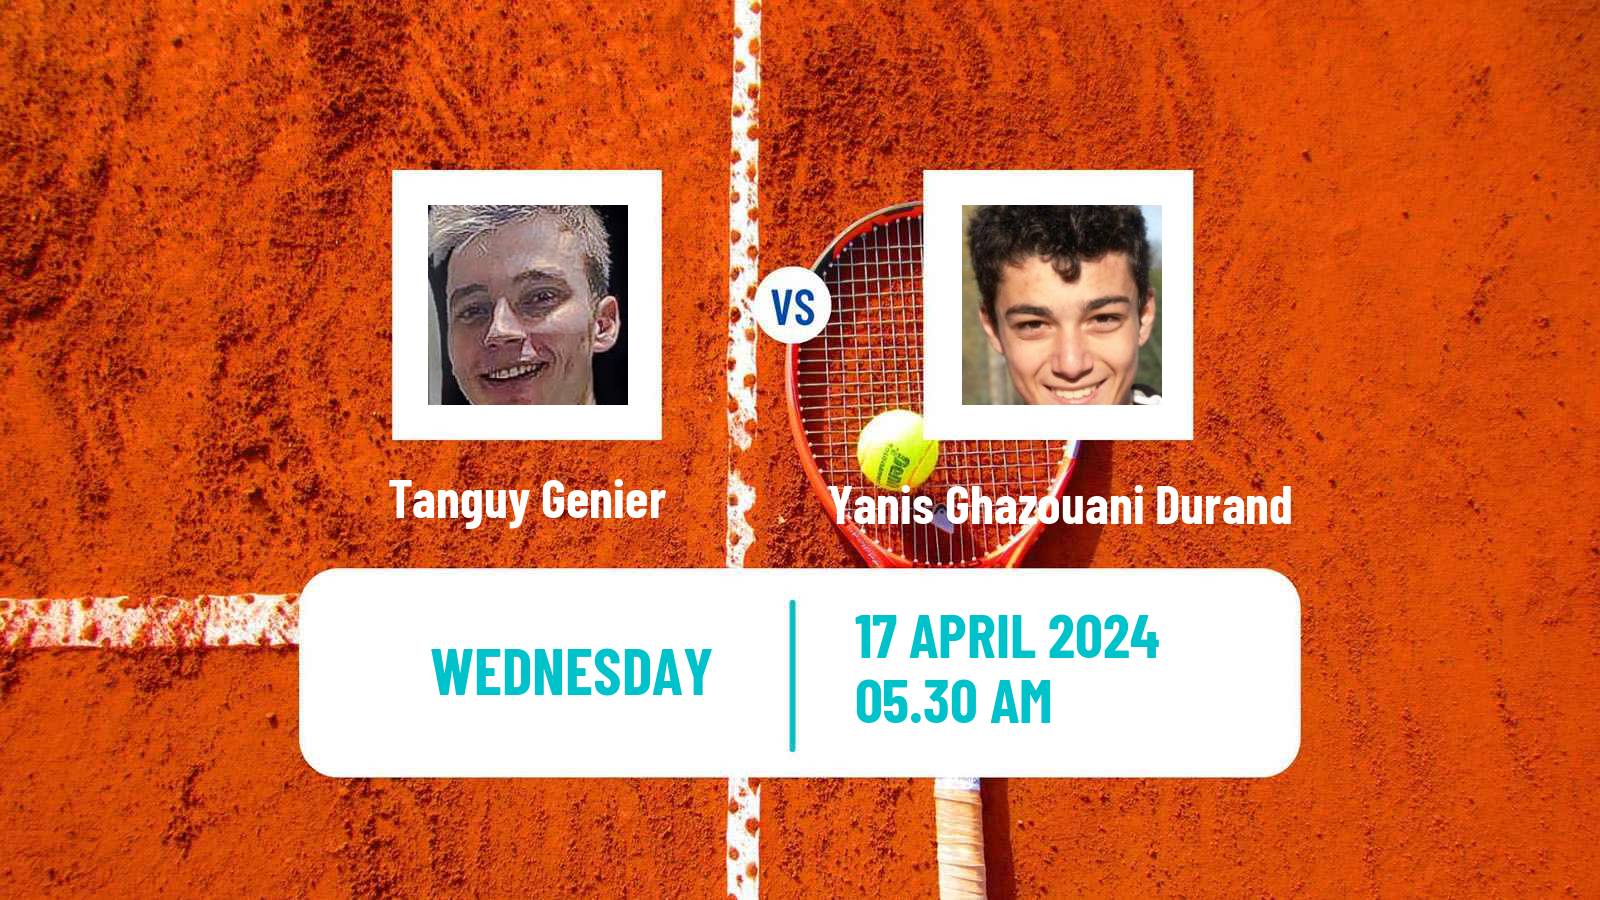 Tennis ITF M15 Azay Le Rideau Men Tanguy Genier - Yanis Ghazouani Durand